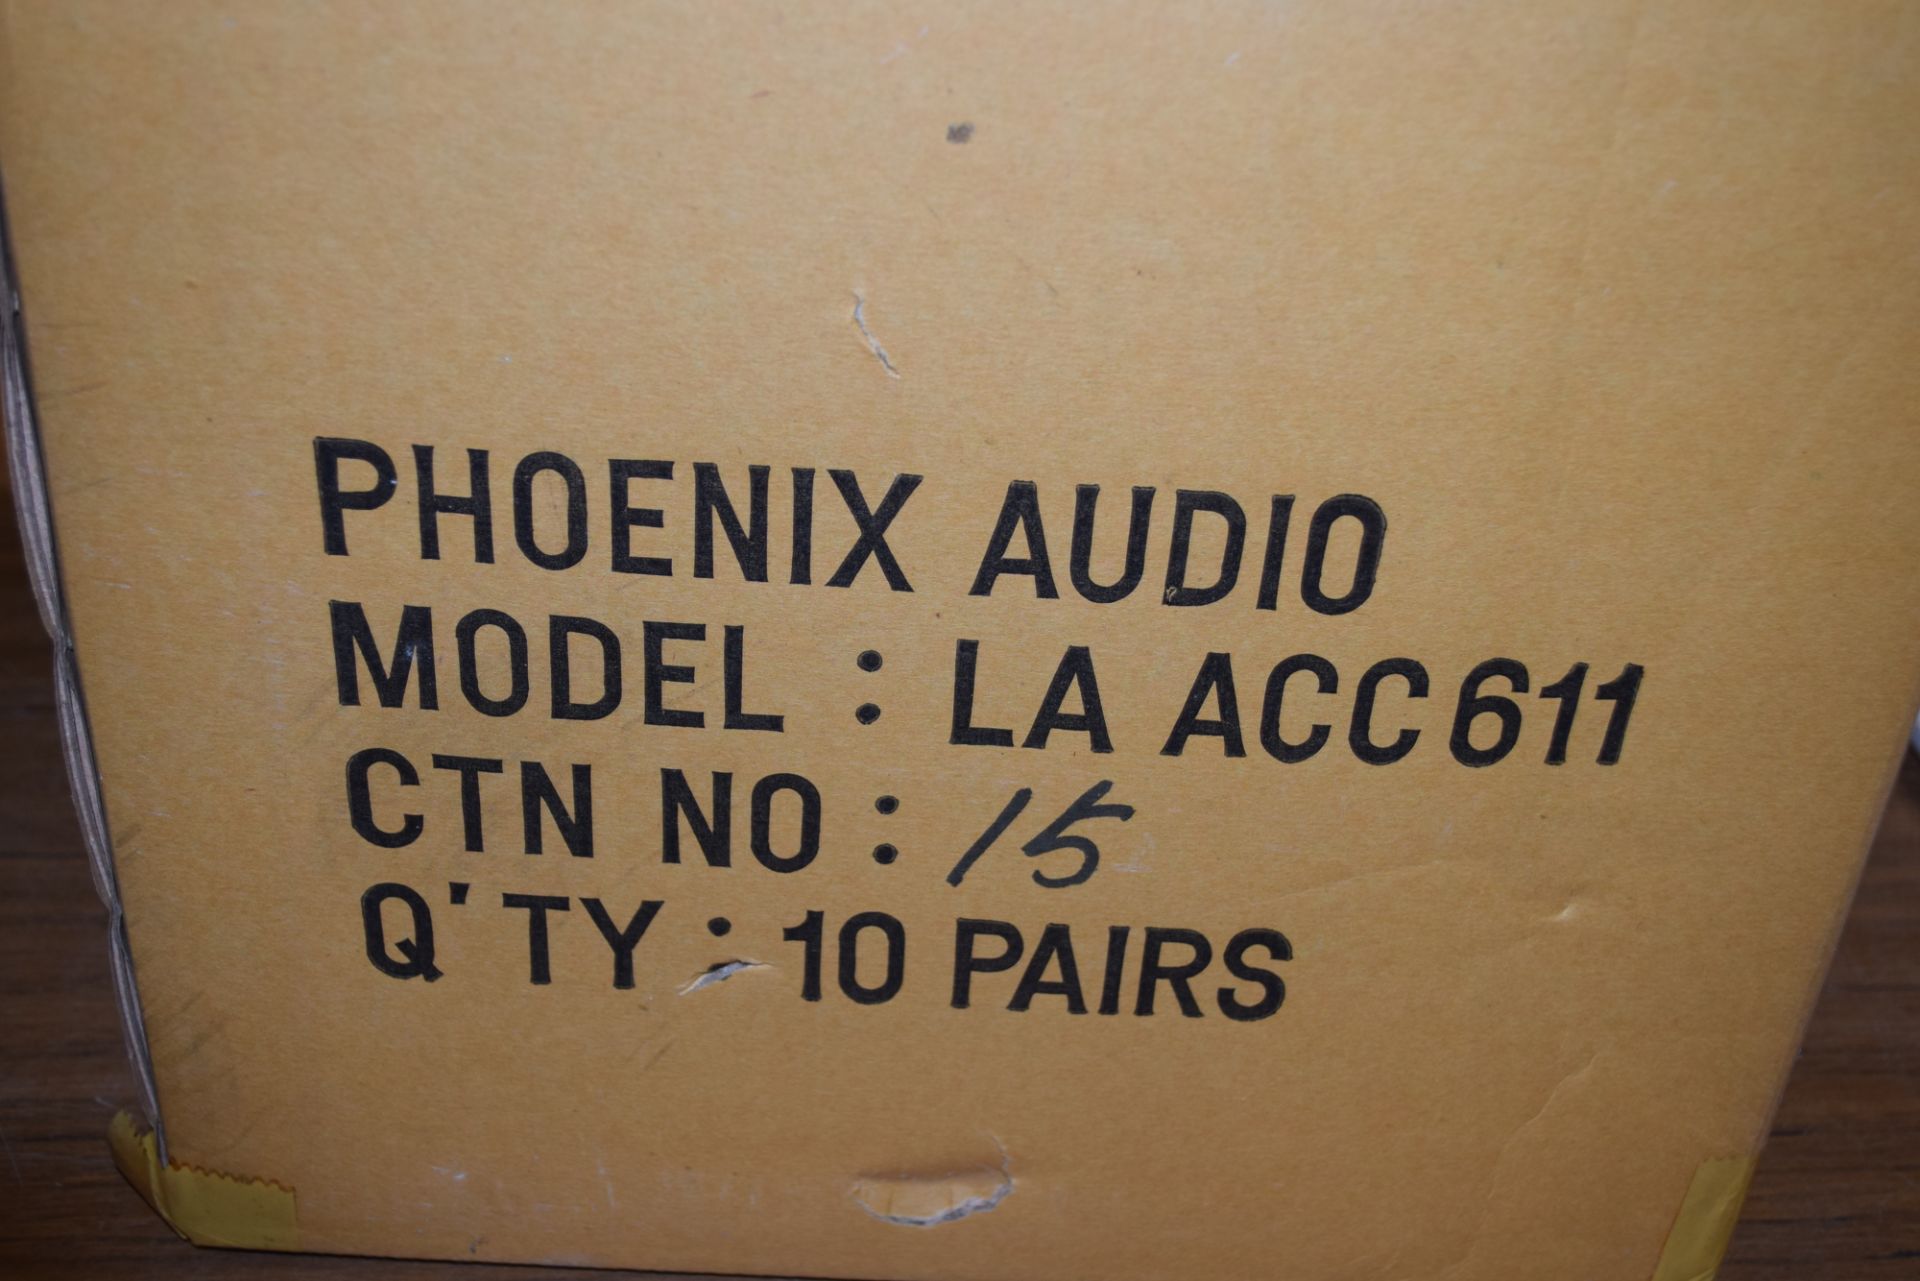 10 BOXED PHOENIX AUDIO CAR SPEAKERS, MODEL NO LAACC611 - Image 4 of 4